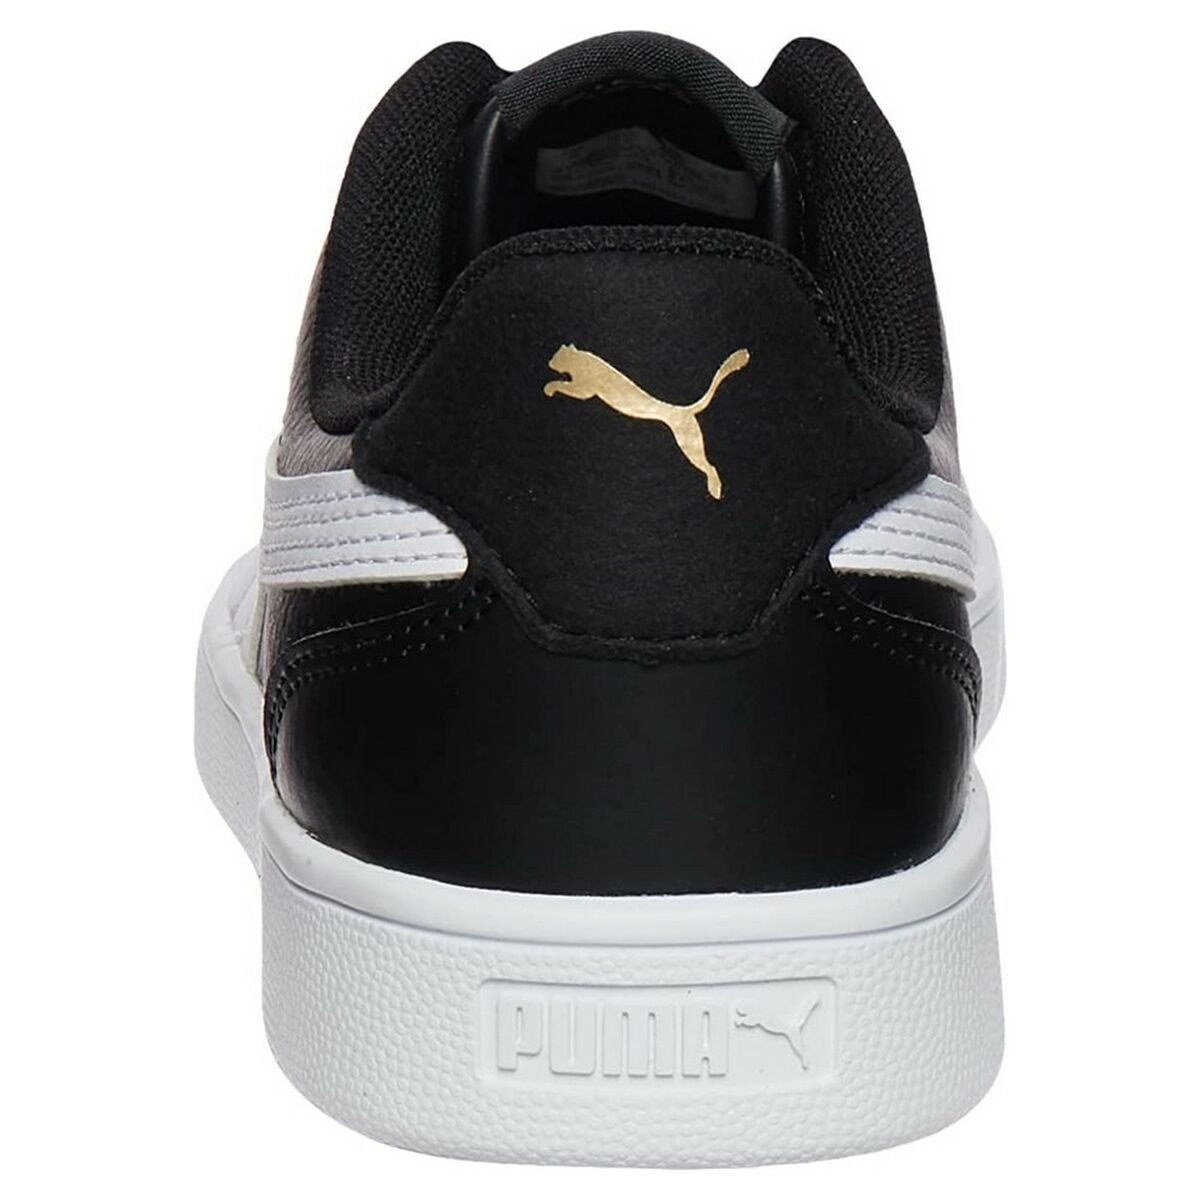 Sports Shoes for Kids Puma 375688 Black